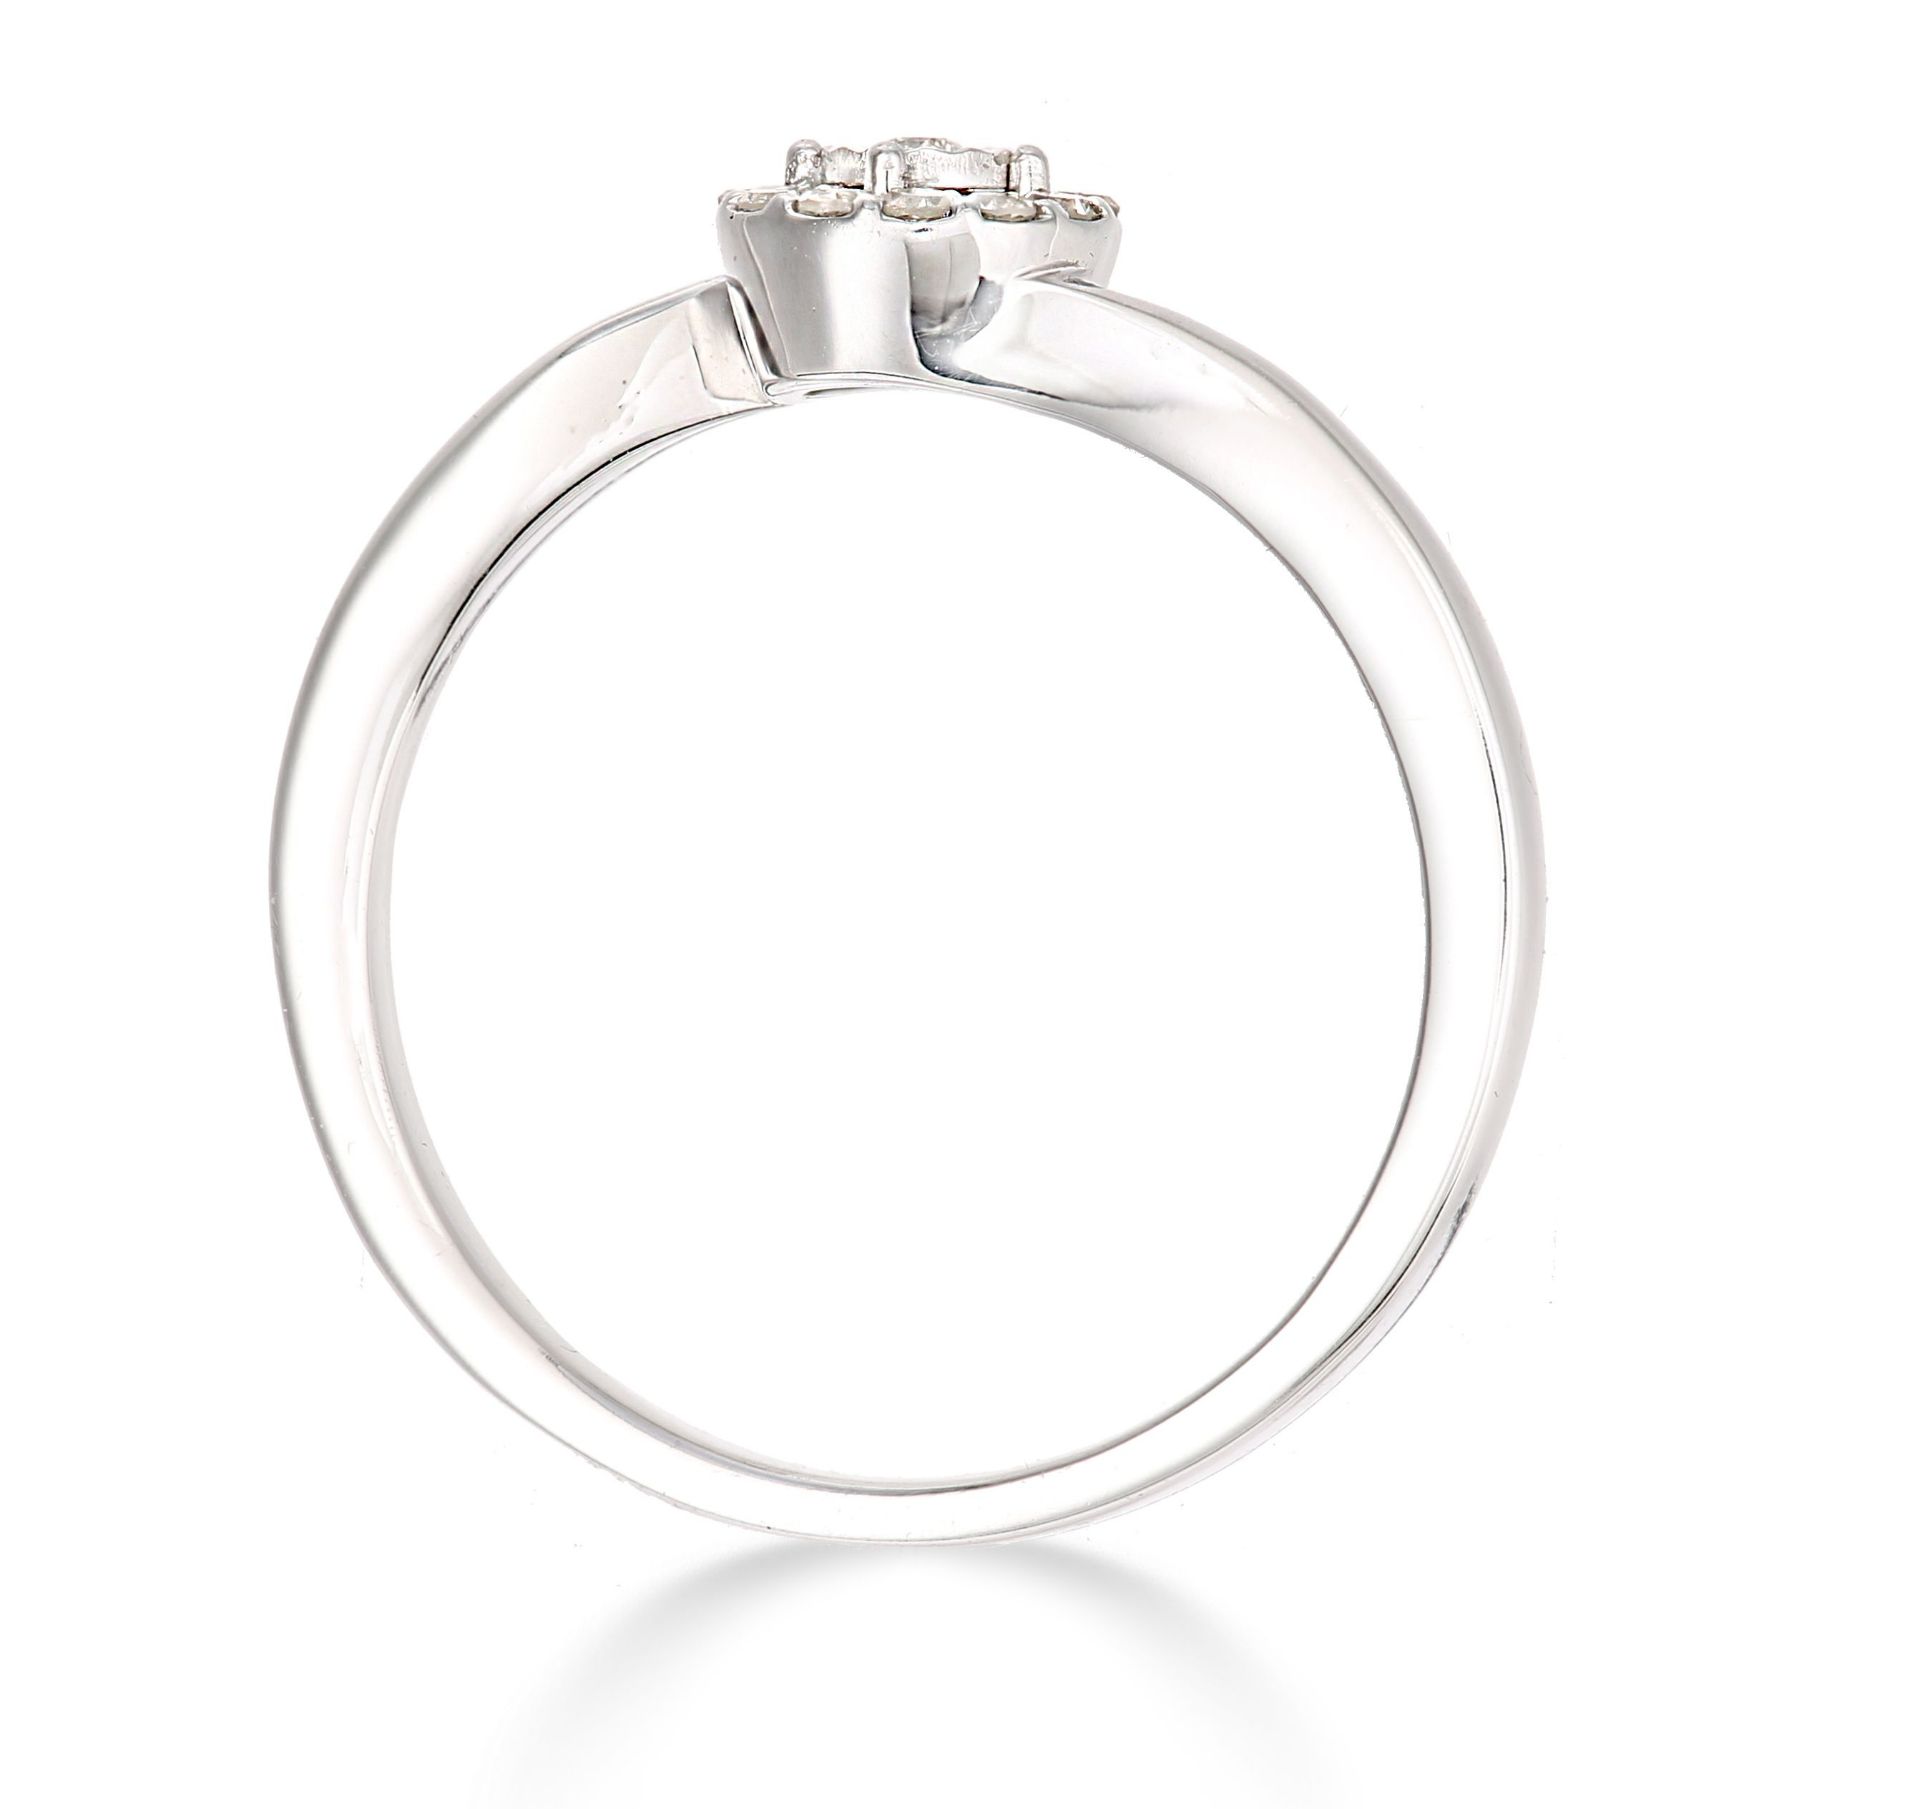 White Gold Diamond Ring with subtle twist Size O RRP £550 (UR4362B